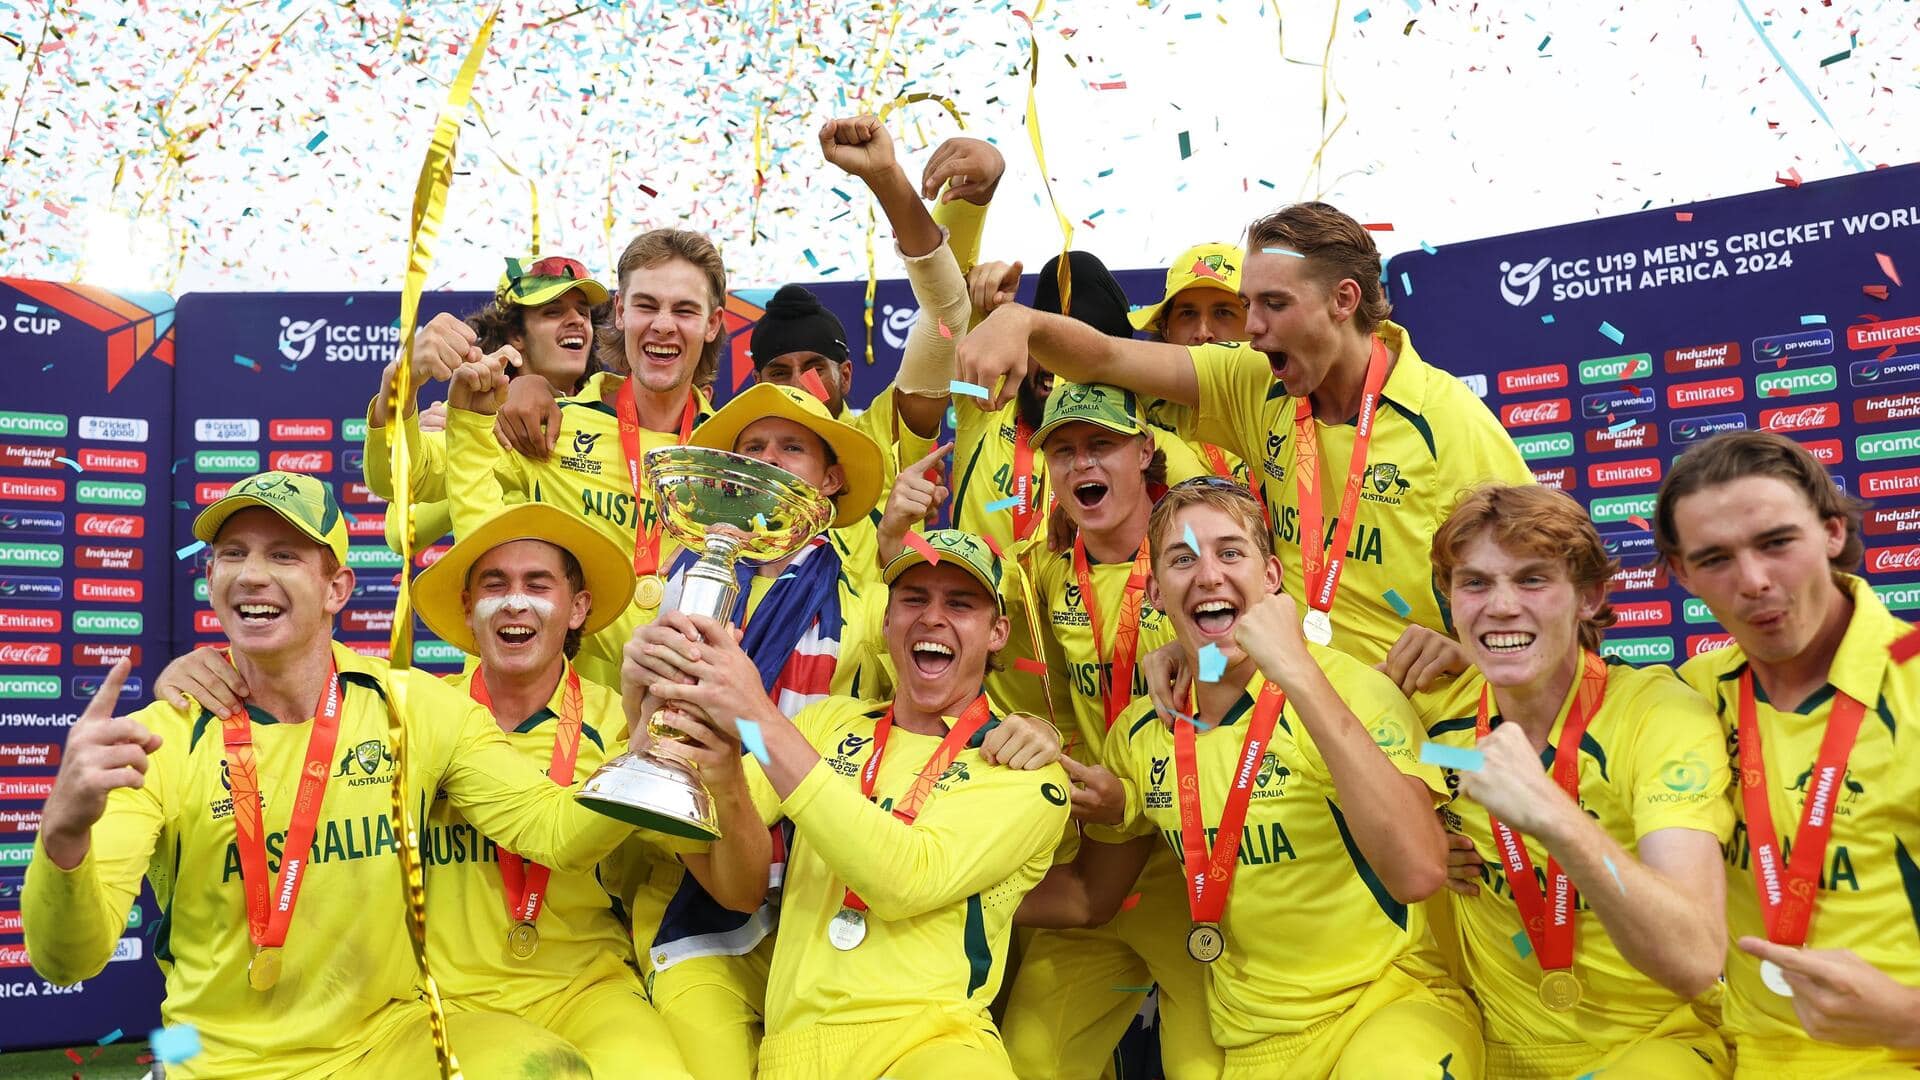 Australia win ICC U-19 World Cup: Decoding the tournament stats